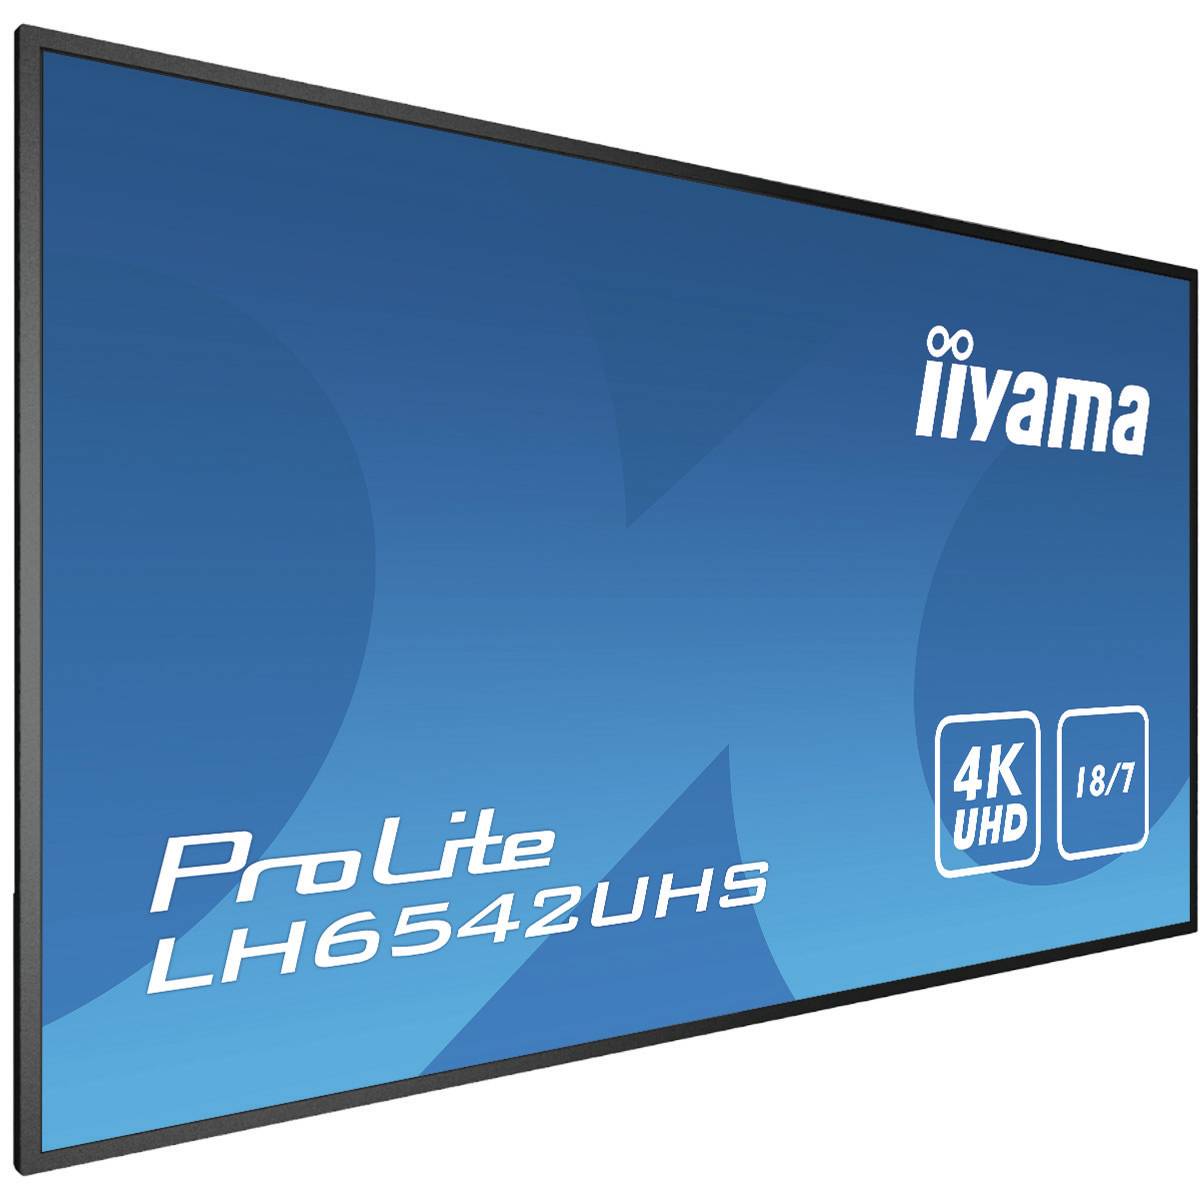 Rca Informatique - image du produit : 64.5IN LED 16:9 LH6542UHS-B3 3840X2160 1200:1 9MS VGA/HDMI/US